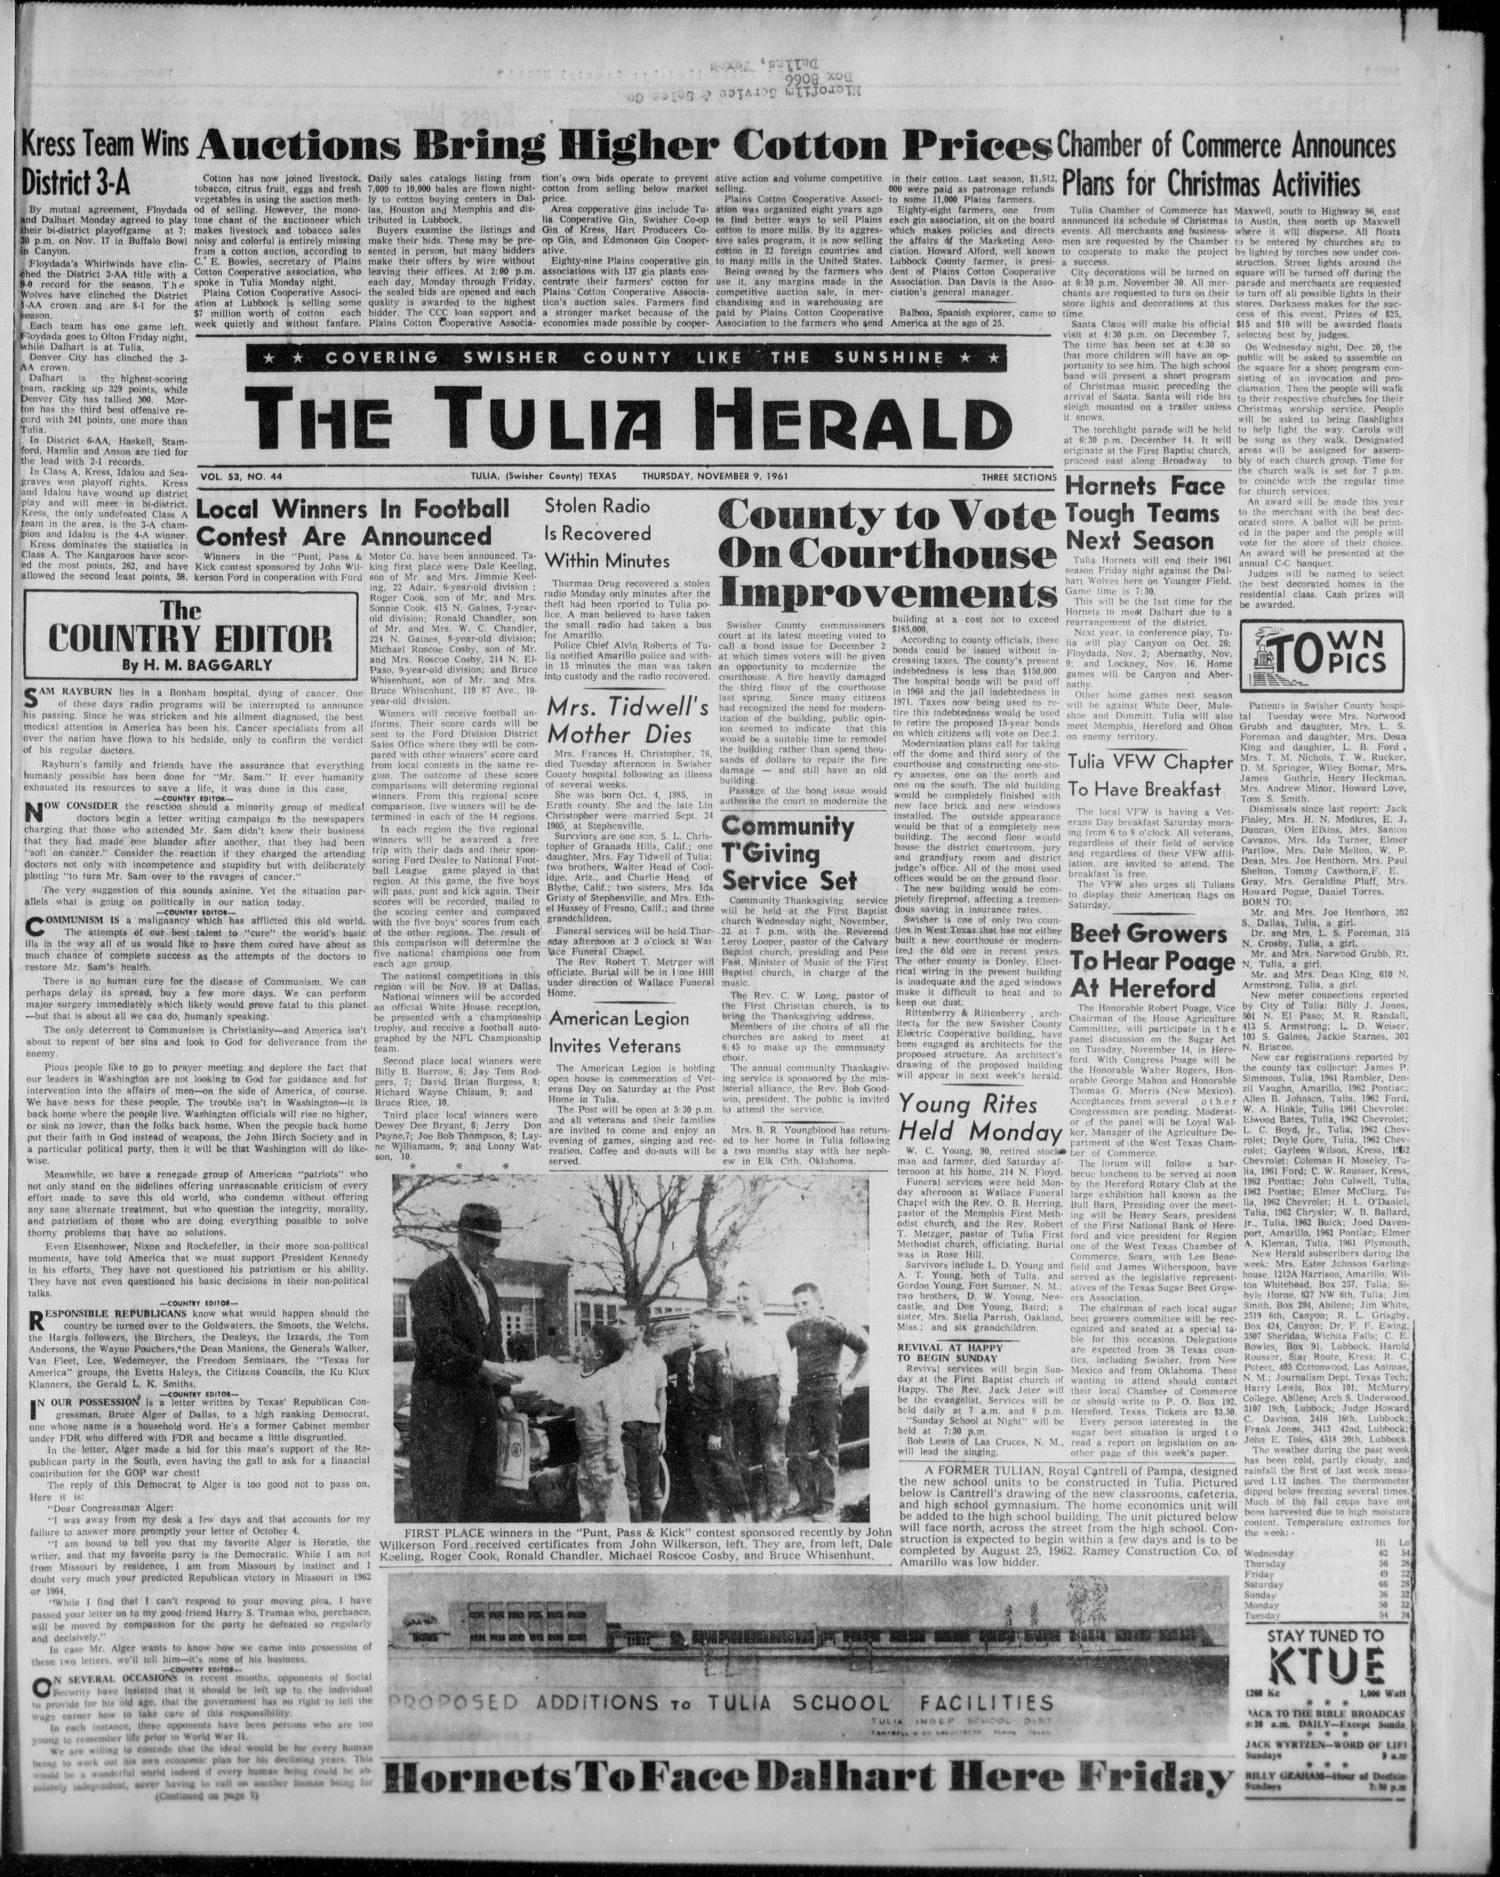 The Tulia Herald (Tulia, Tex), Vol. 53, No. 44, Ed. 1, Thursday, November 9, 1961
                                                
                                                    1
                                                